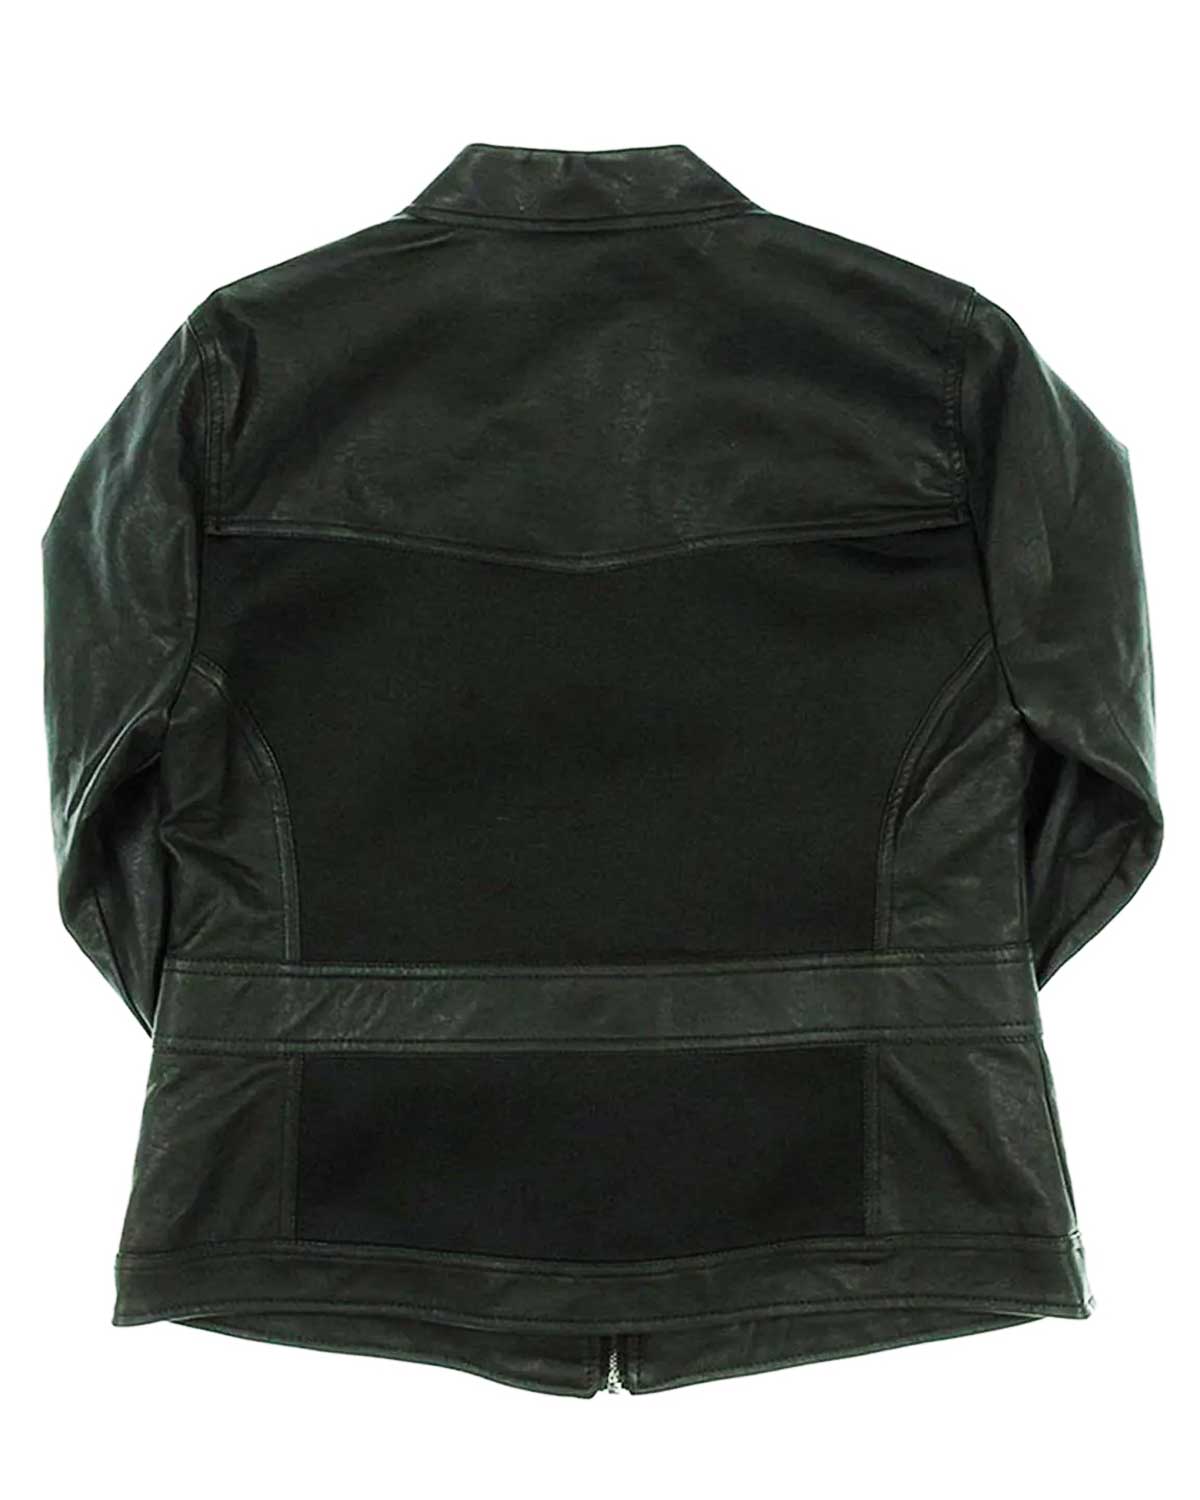  Black Widow Natasha Romanoff Avengers Endgame Leather Jacket